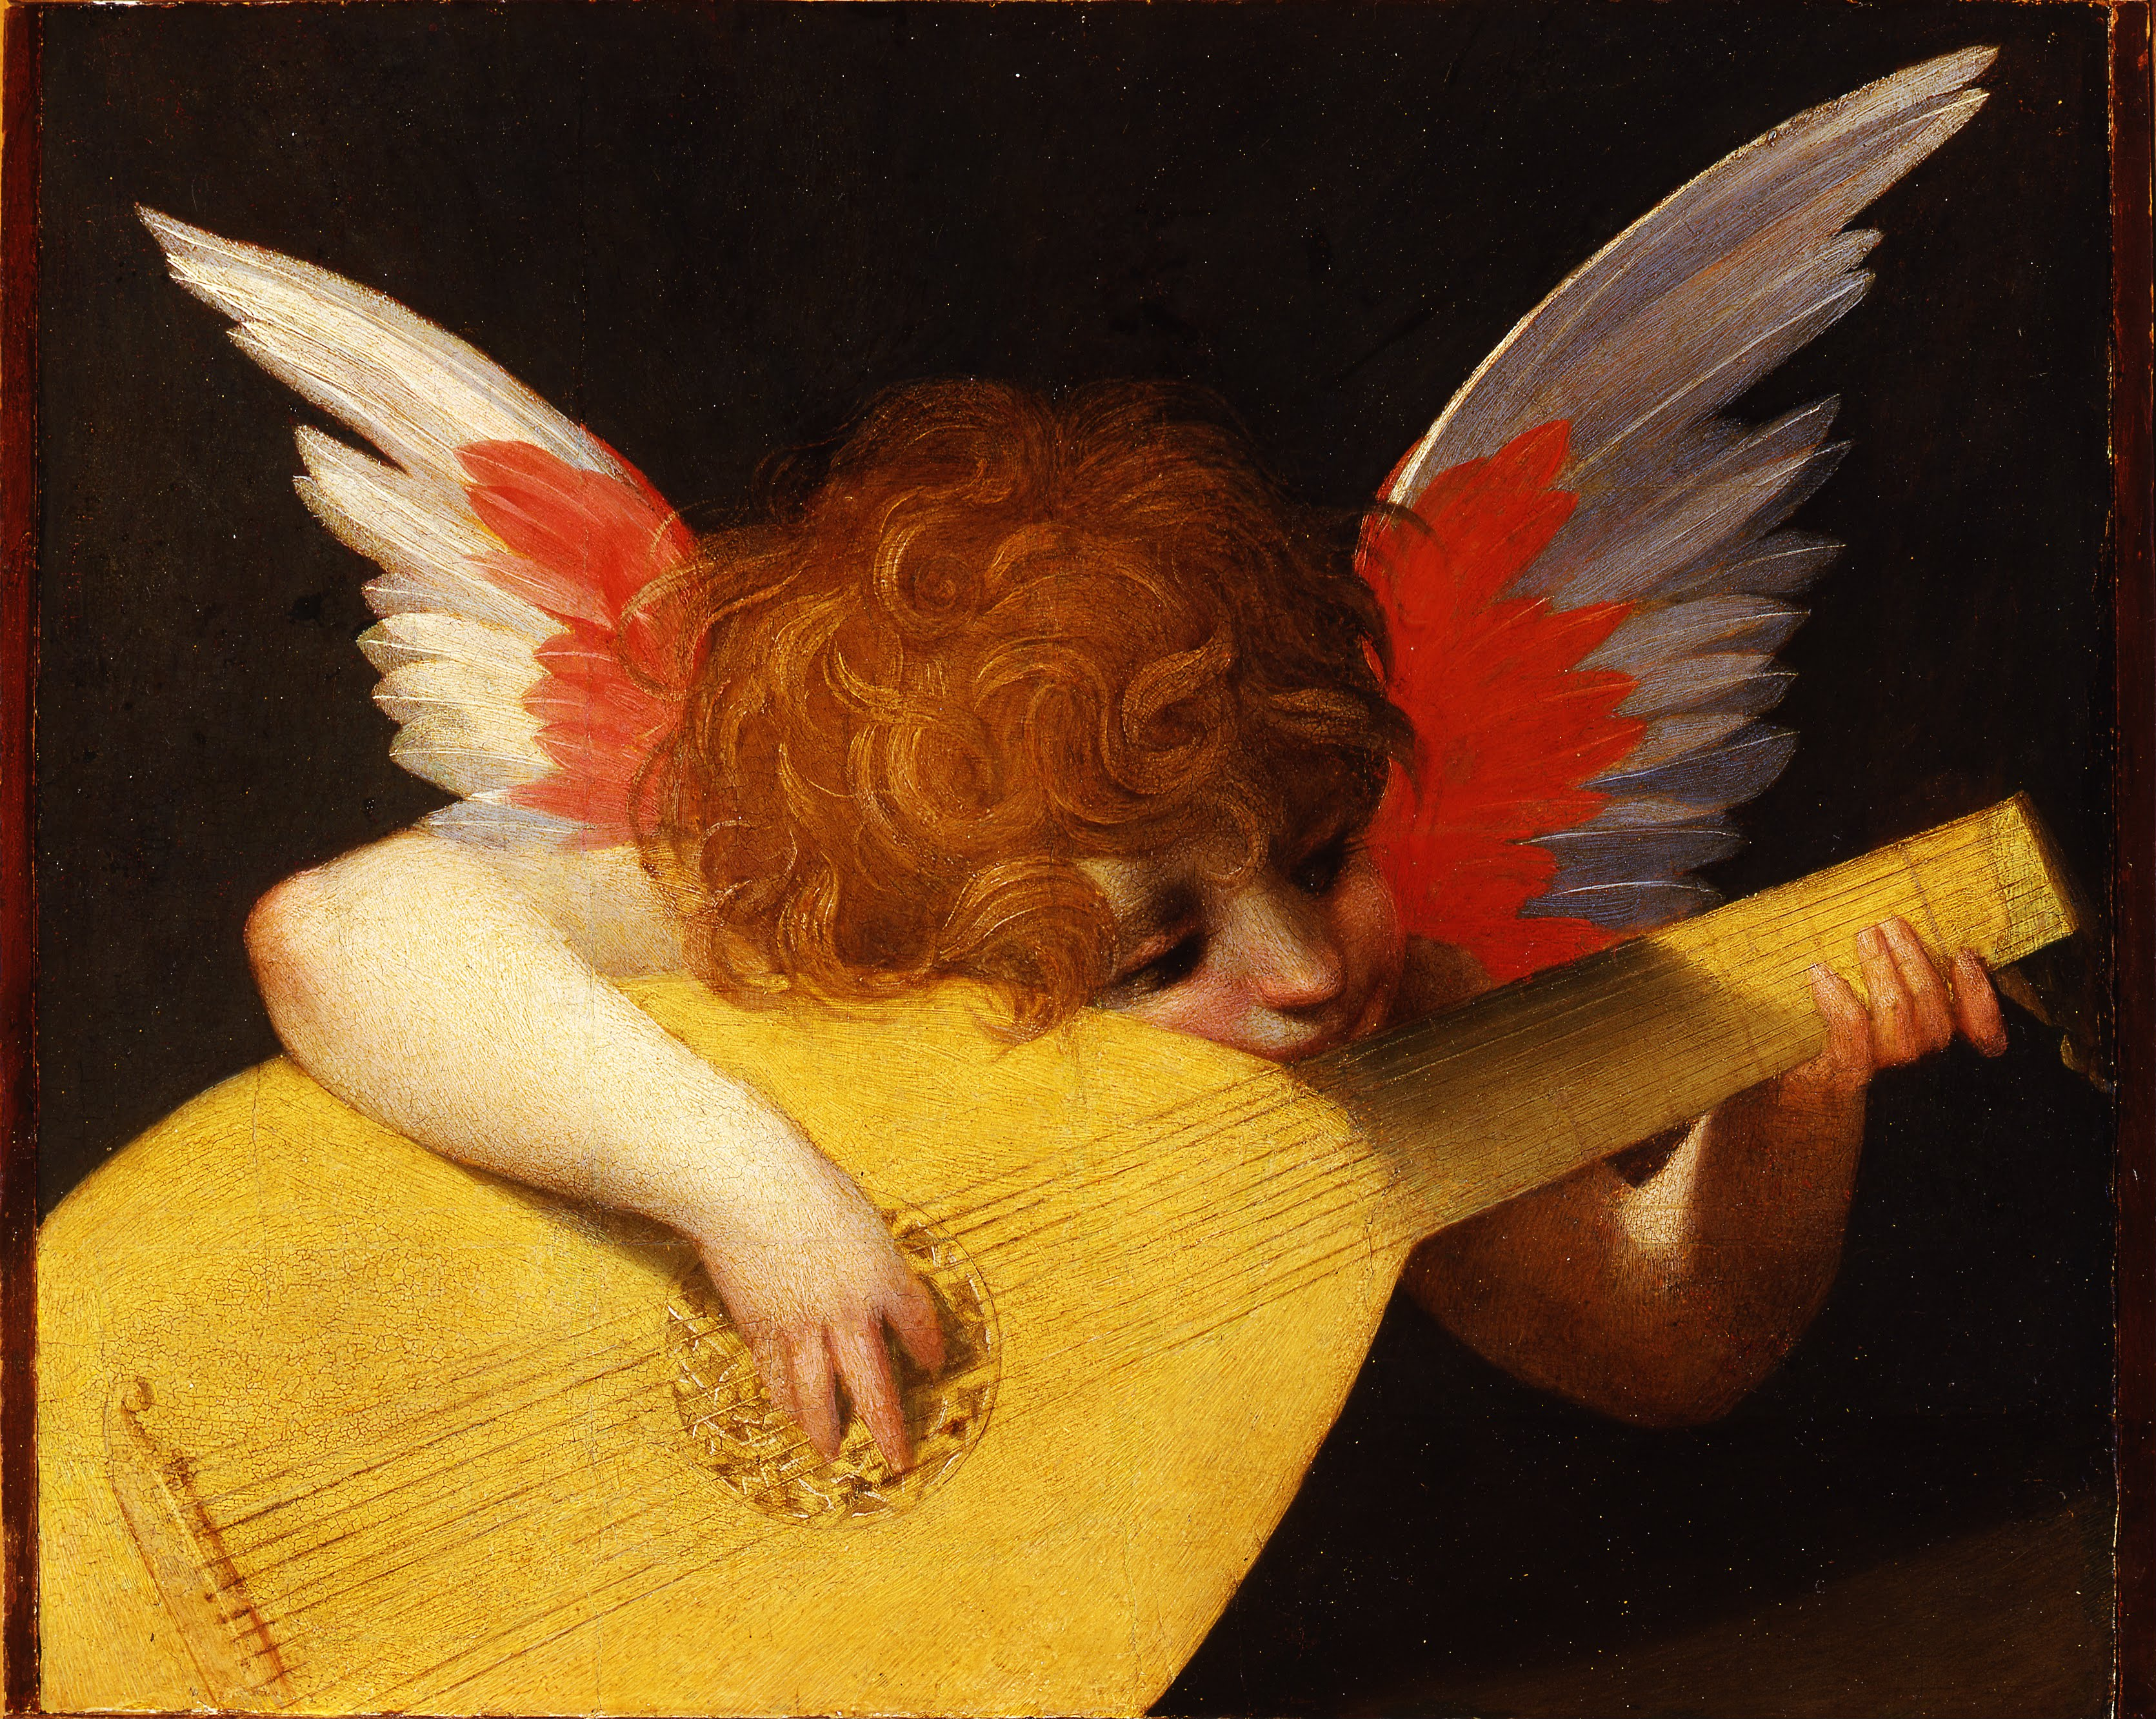 奏樂小天使 by Rosso Fiorentino - 1521 年 - 39.5 x 47 厘米 